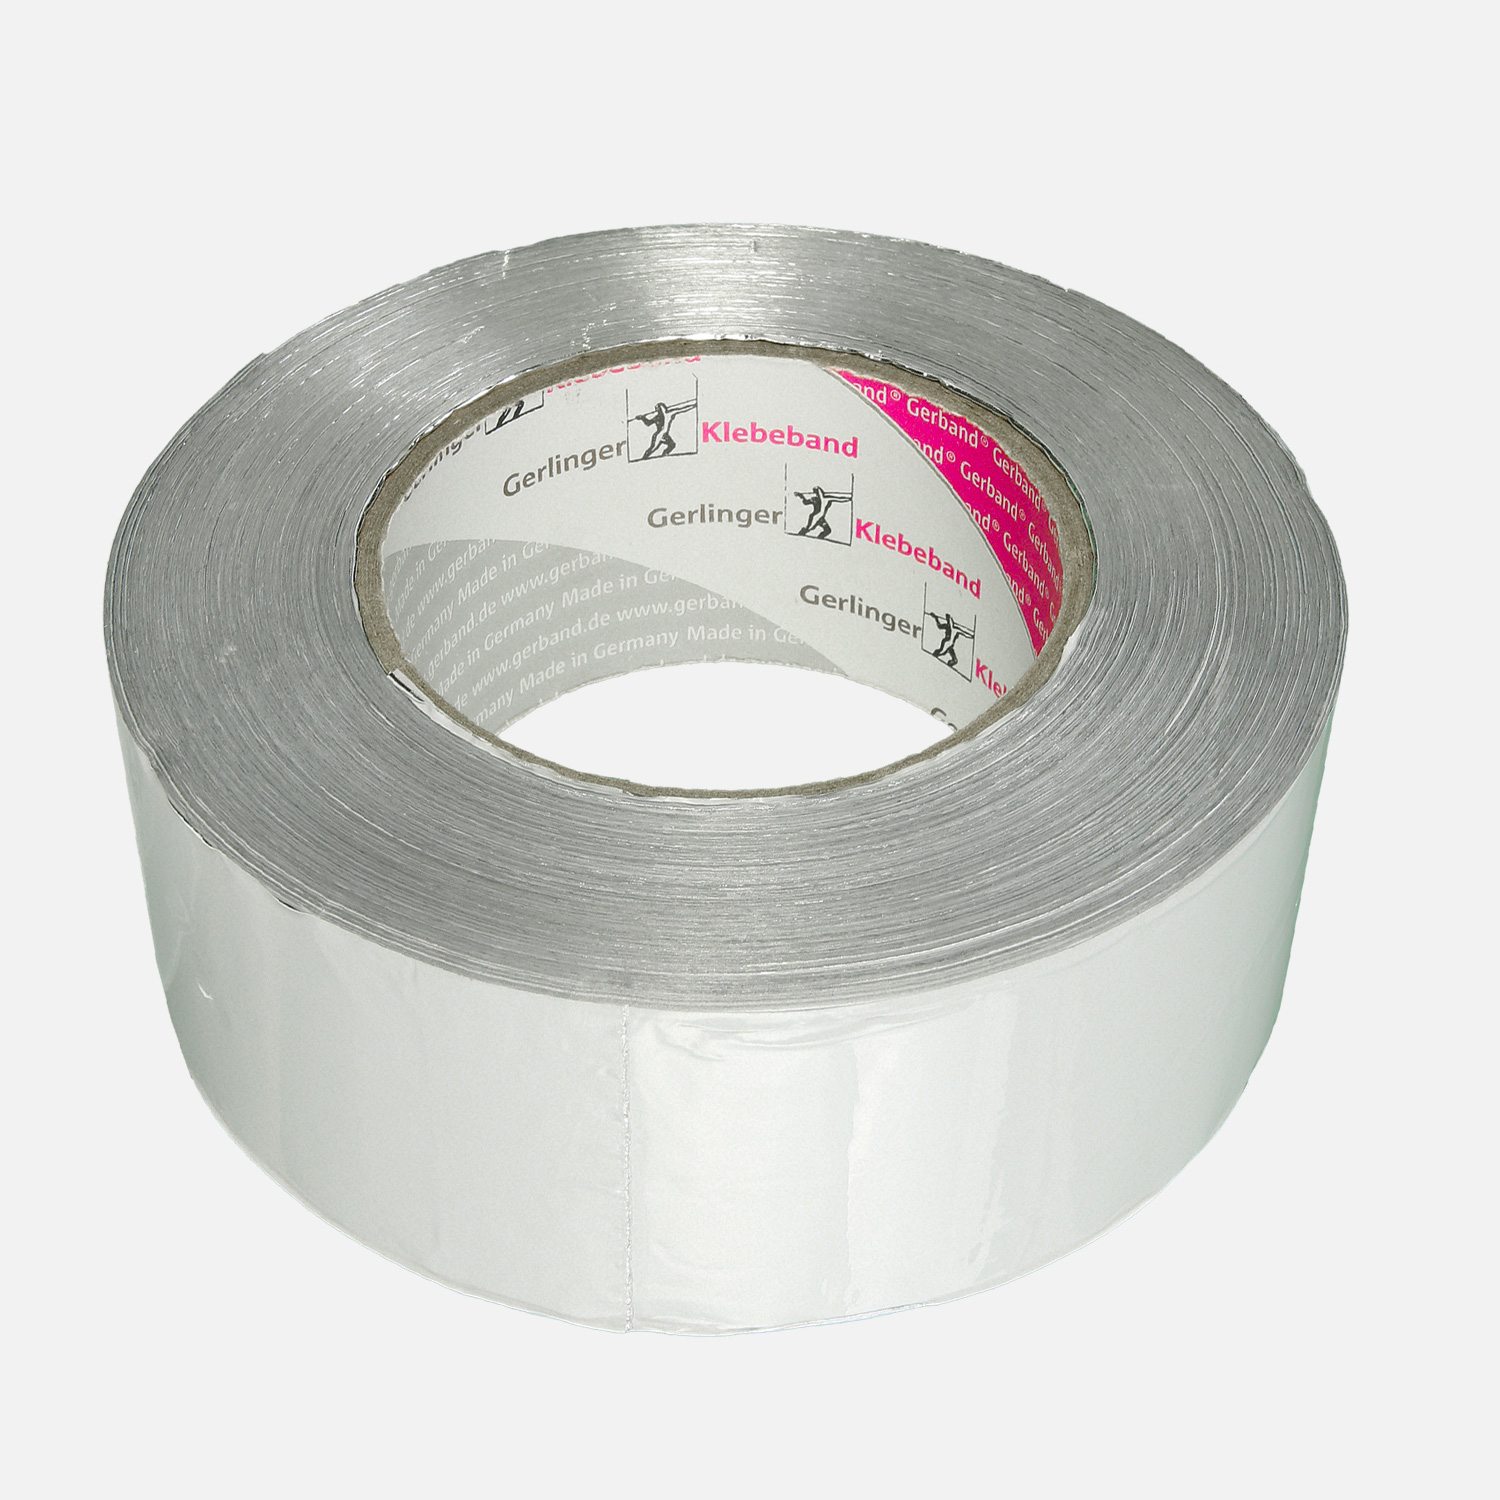 100m Rolle Aluminium-Klebeband / Reinaluminium (Gerband 705) - 50 mm breit